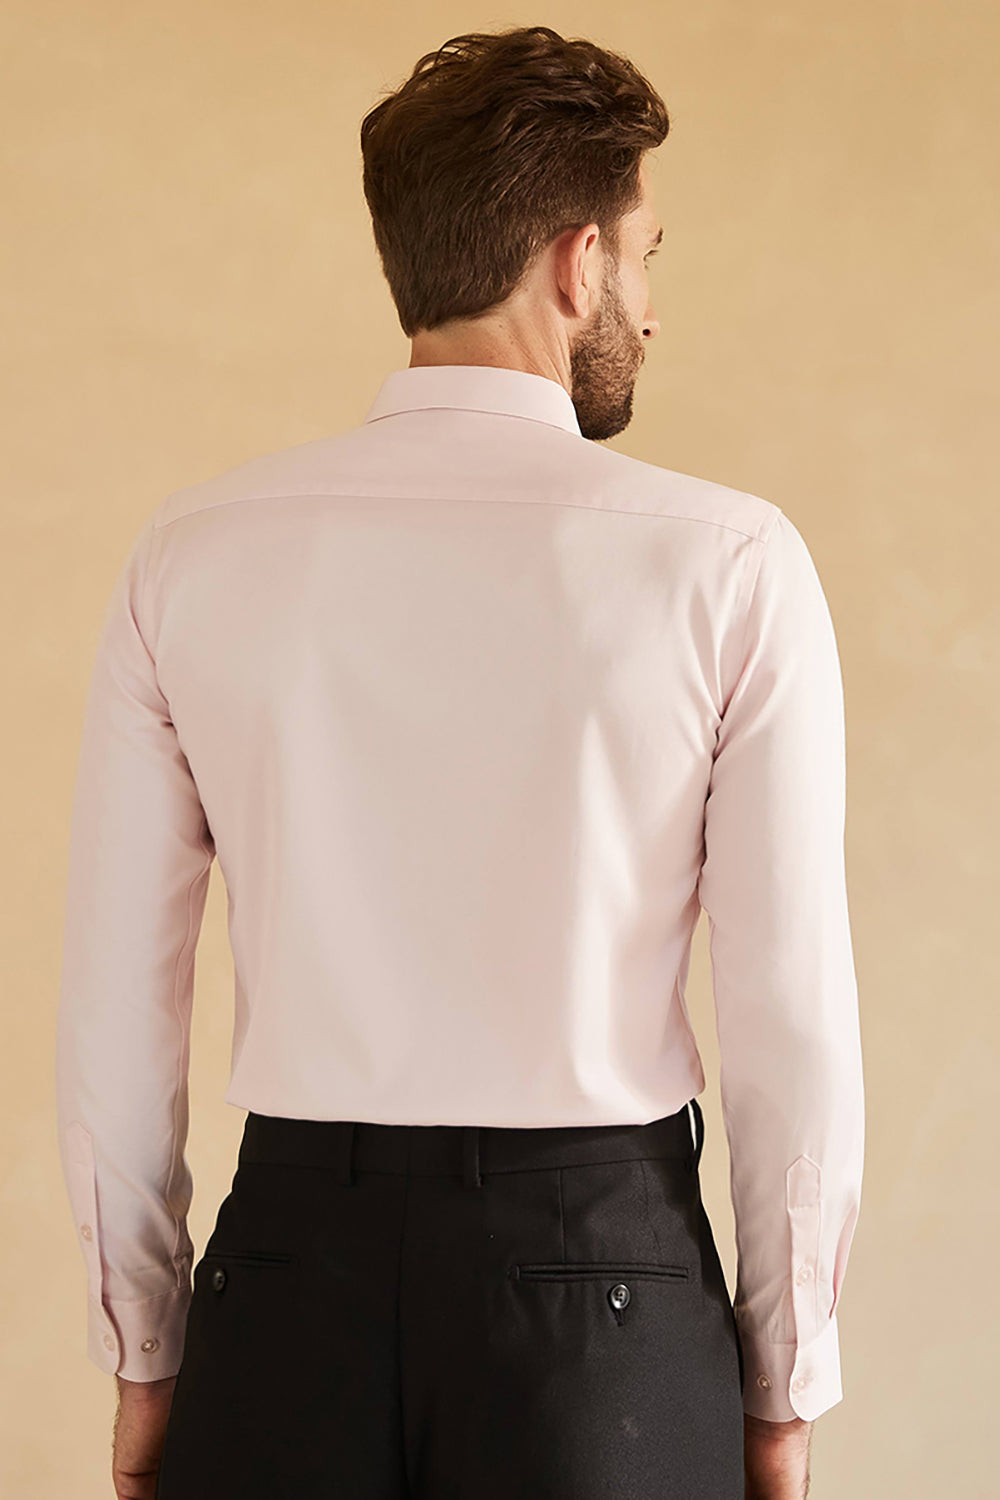 Long Sleeves Light Khaki Solid Suit Shirt